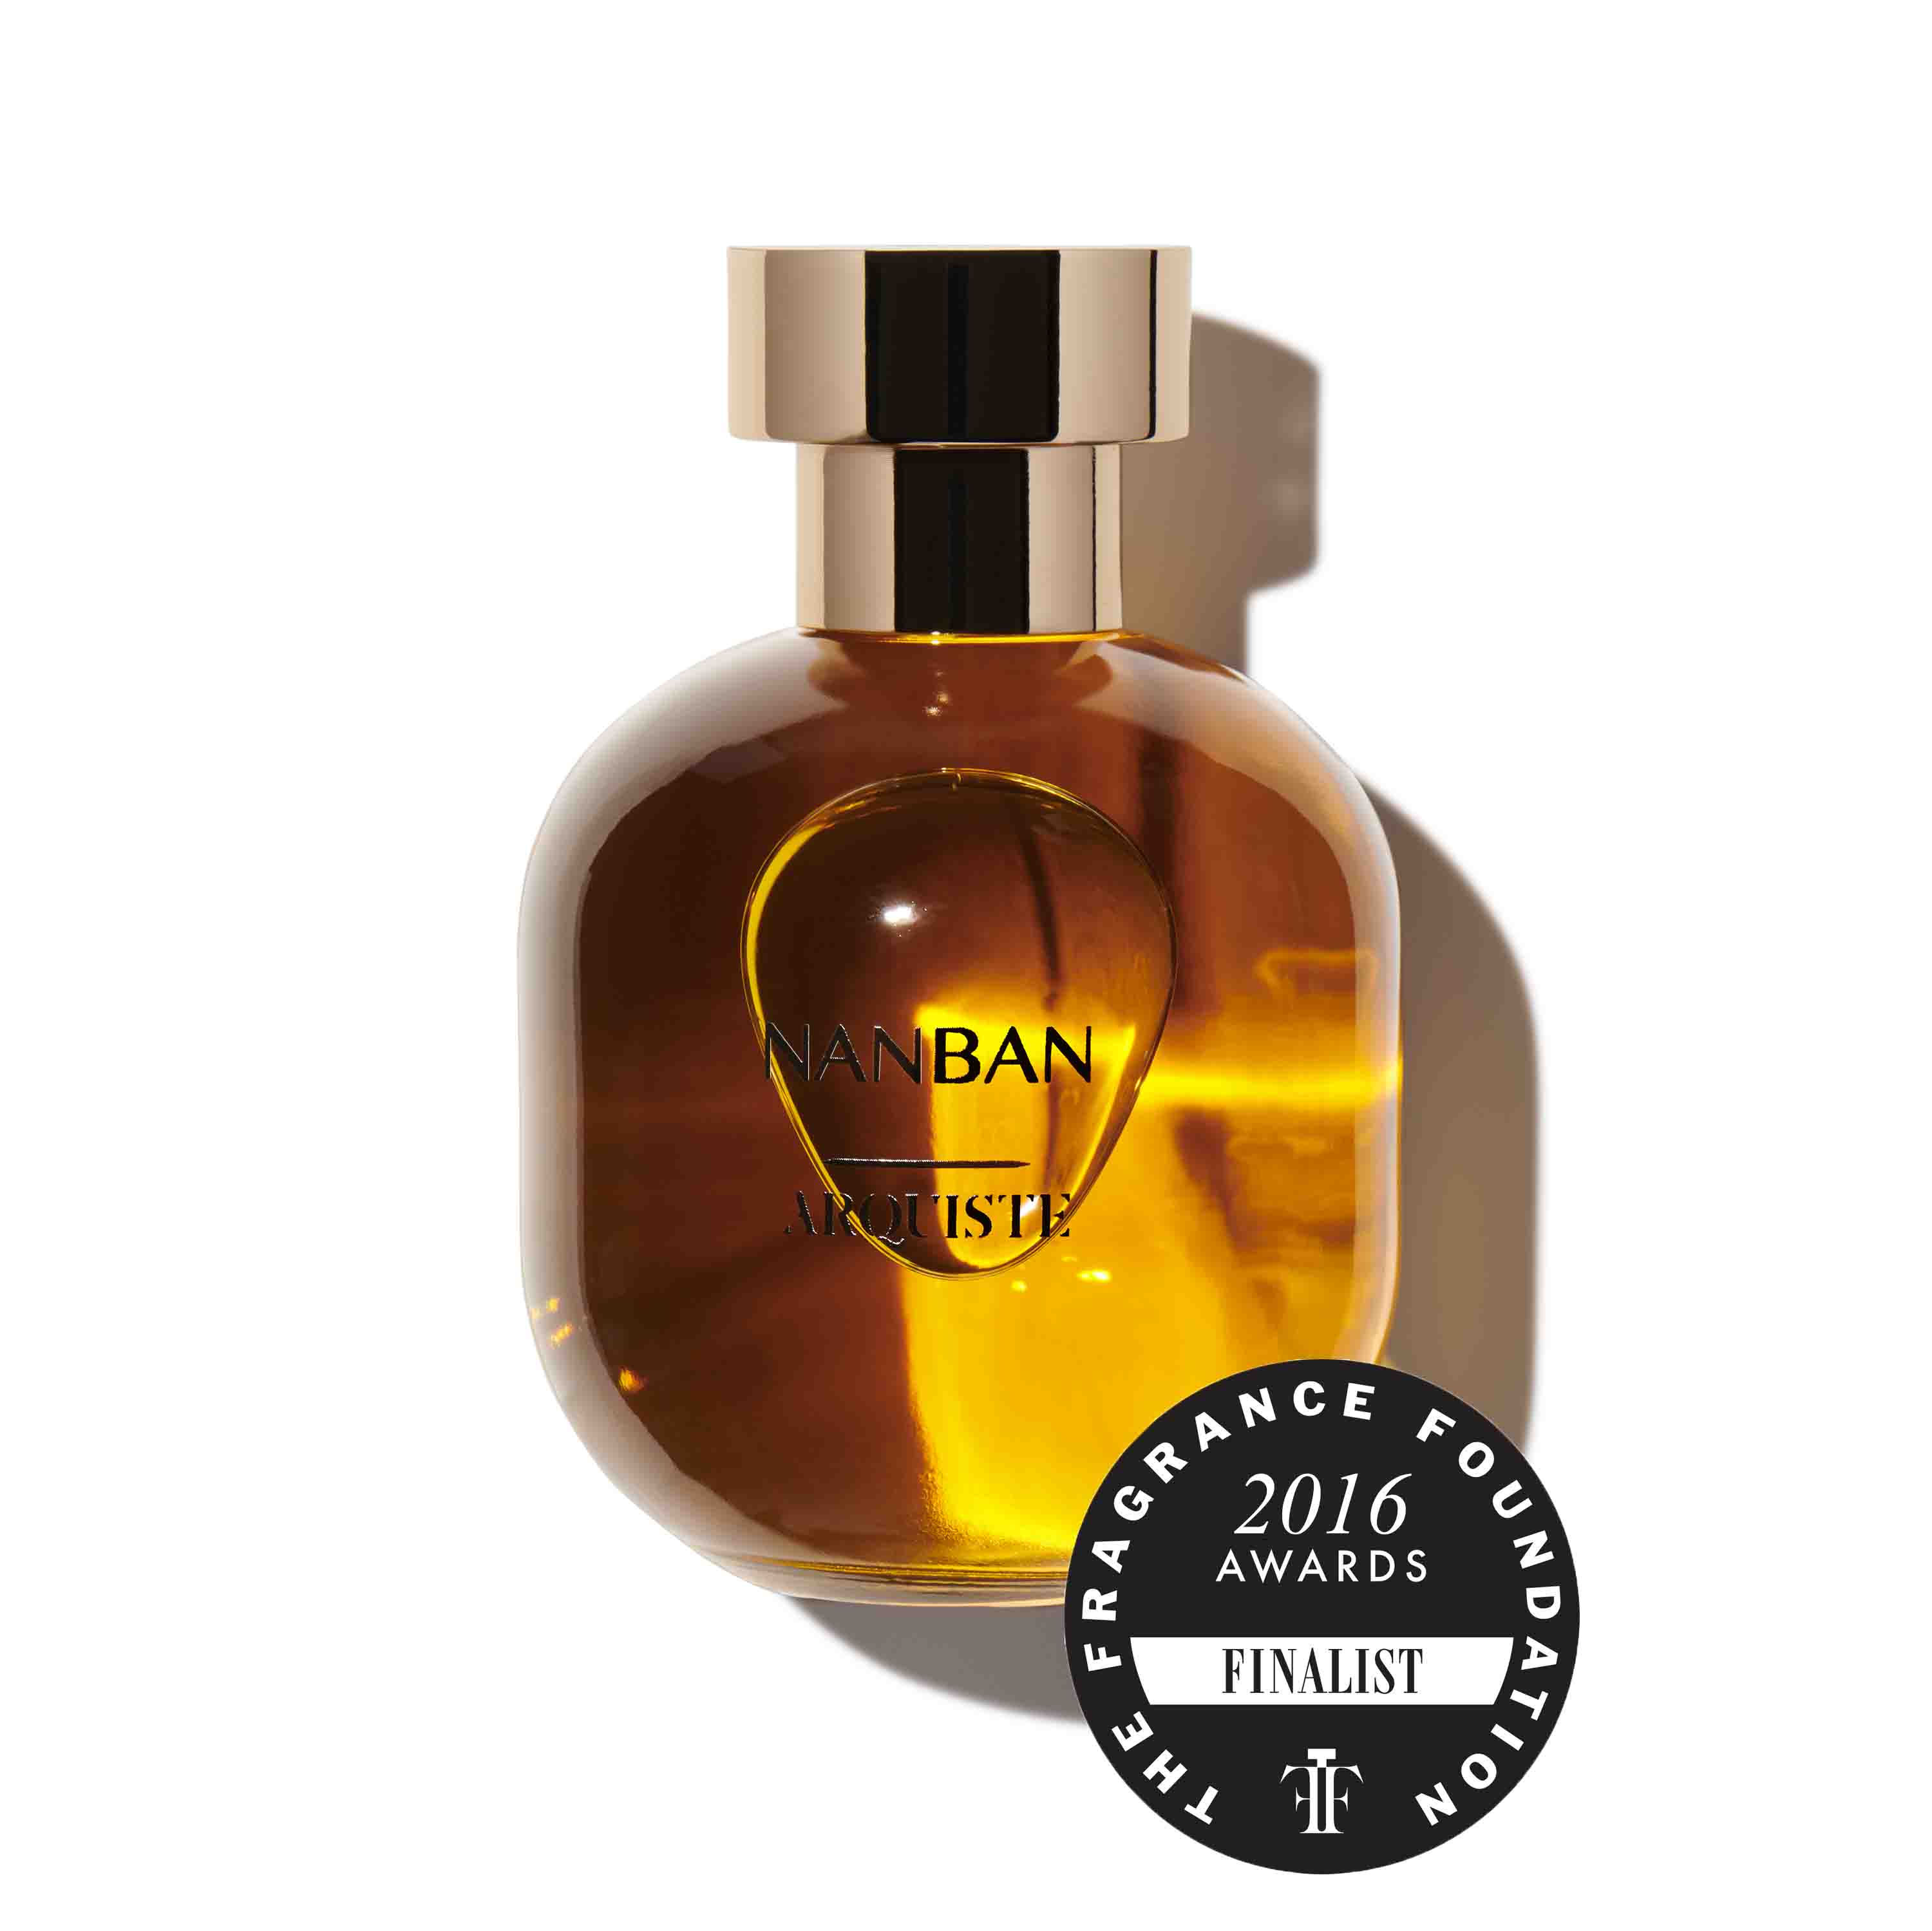 Nanban by Arquiste, 100ml Eau de Parfum